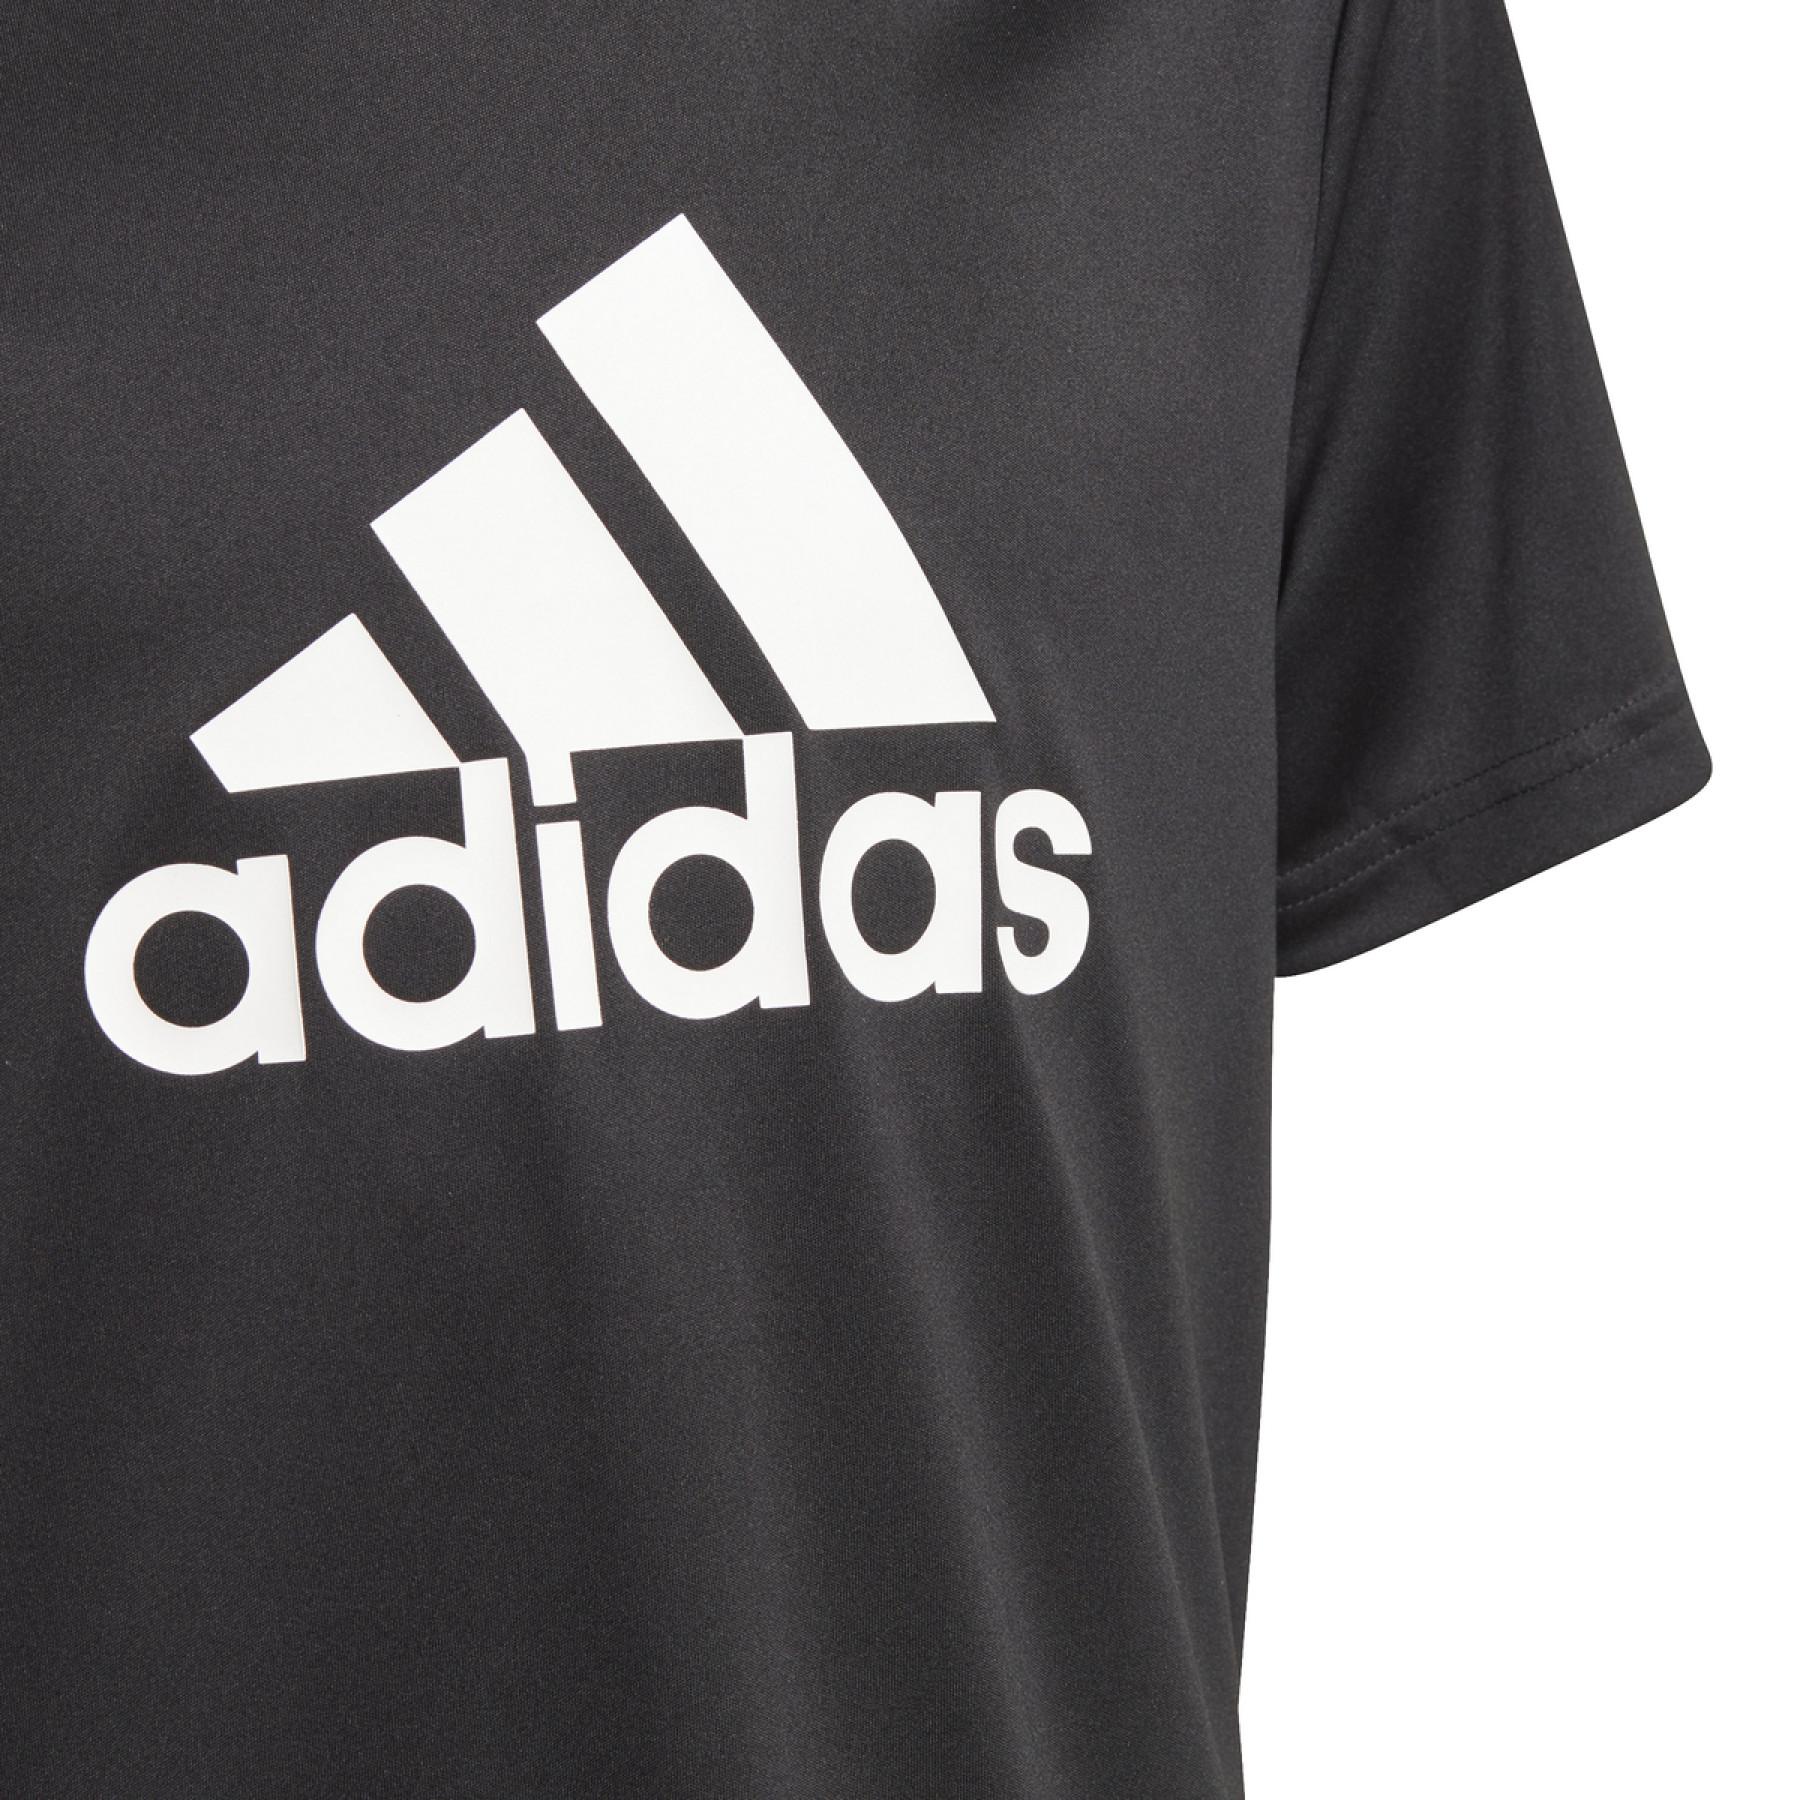 Koszulka dziecięca adidas Designed To Move Big Logo